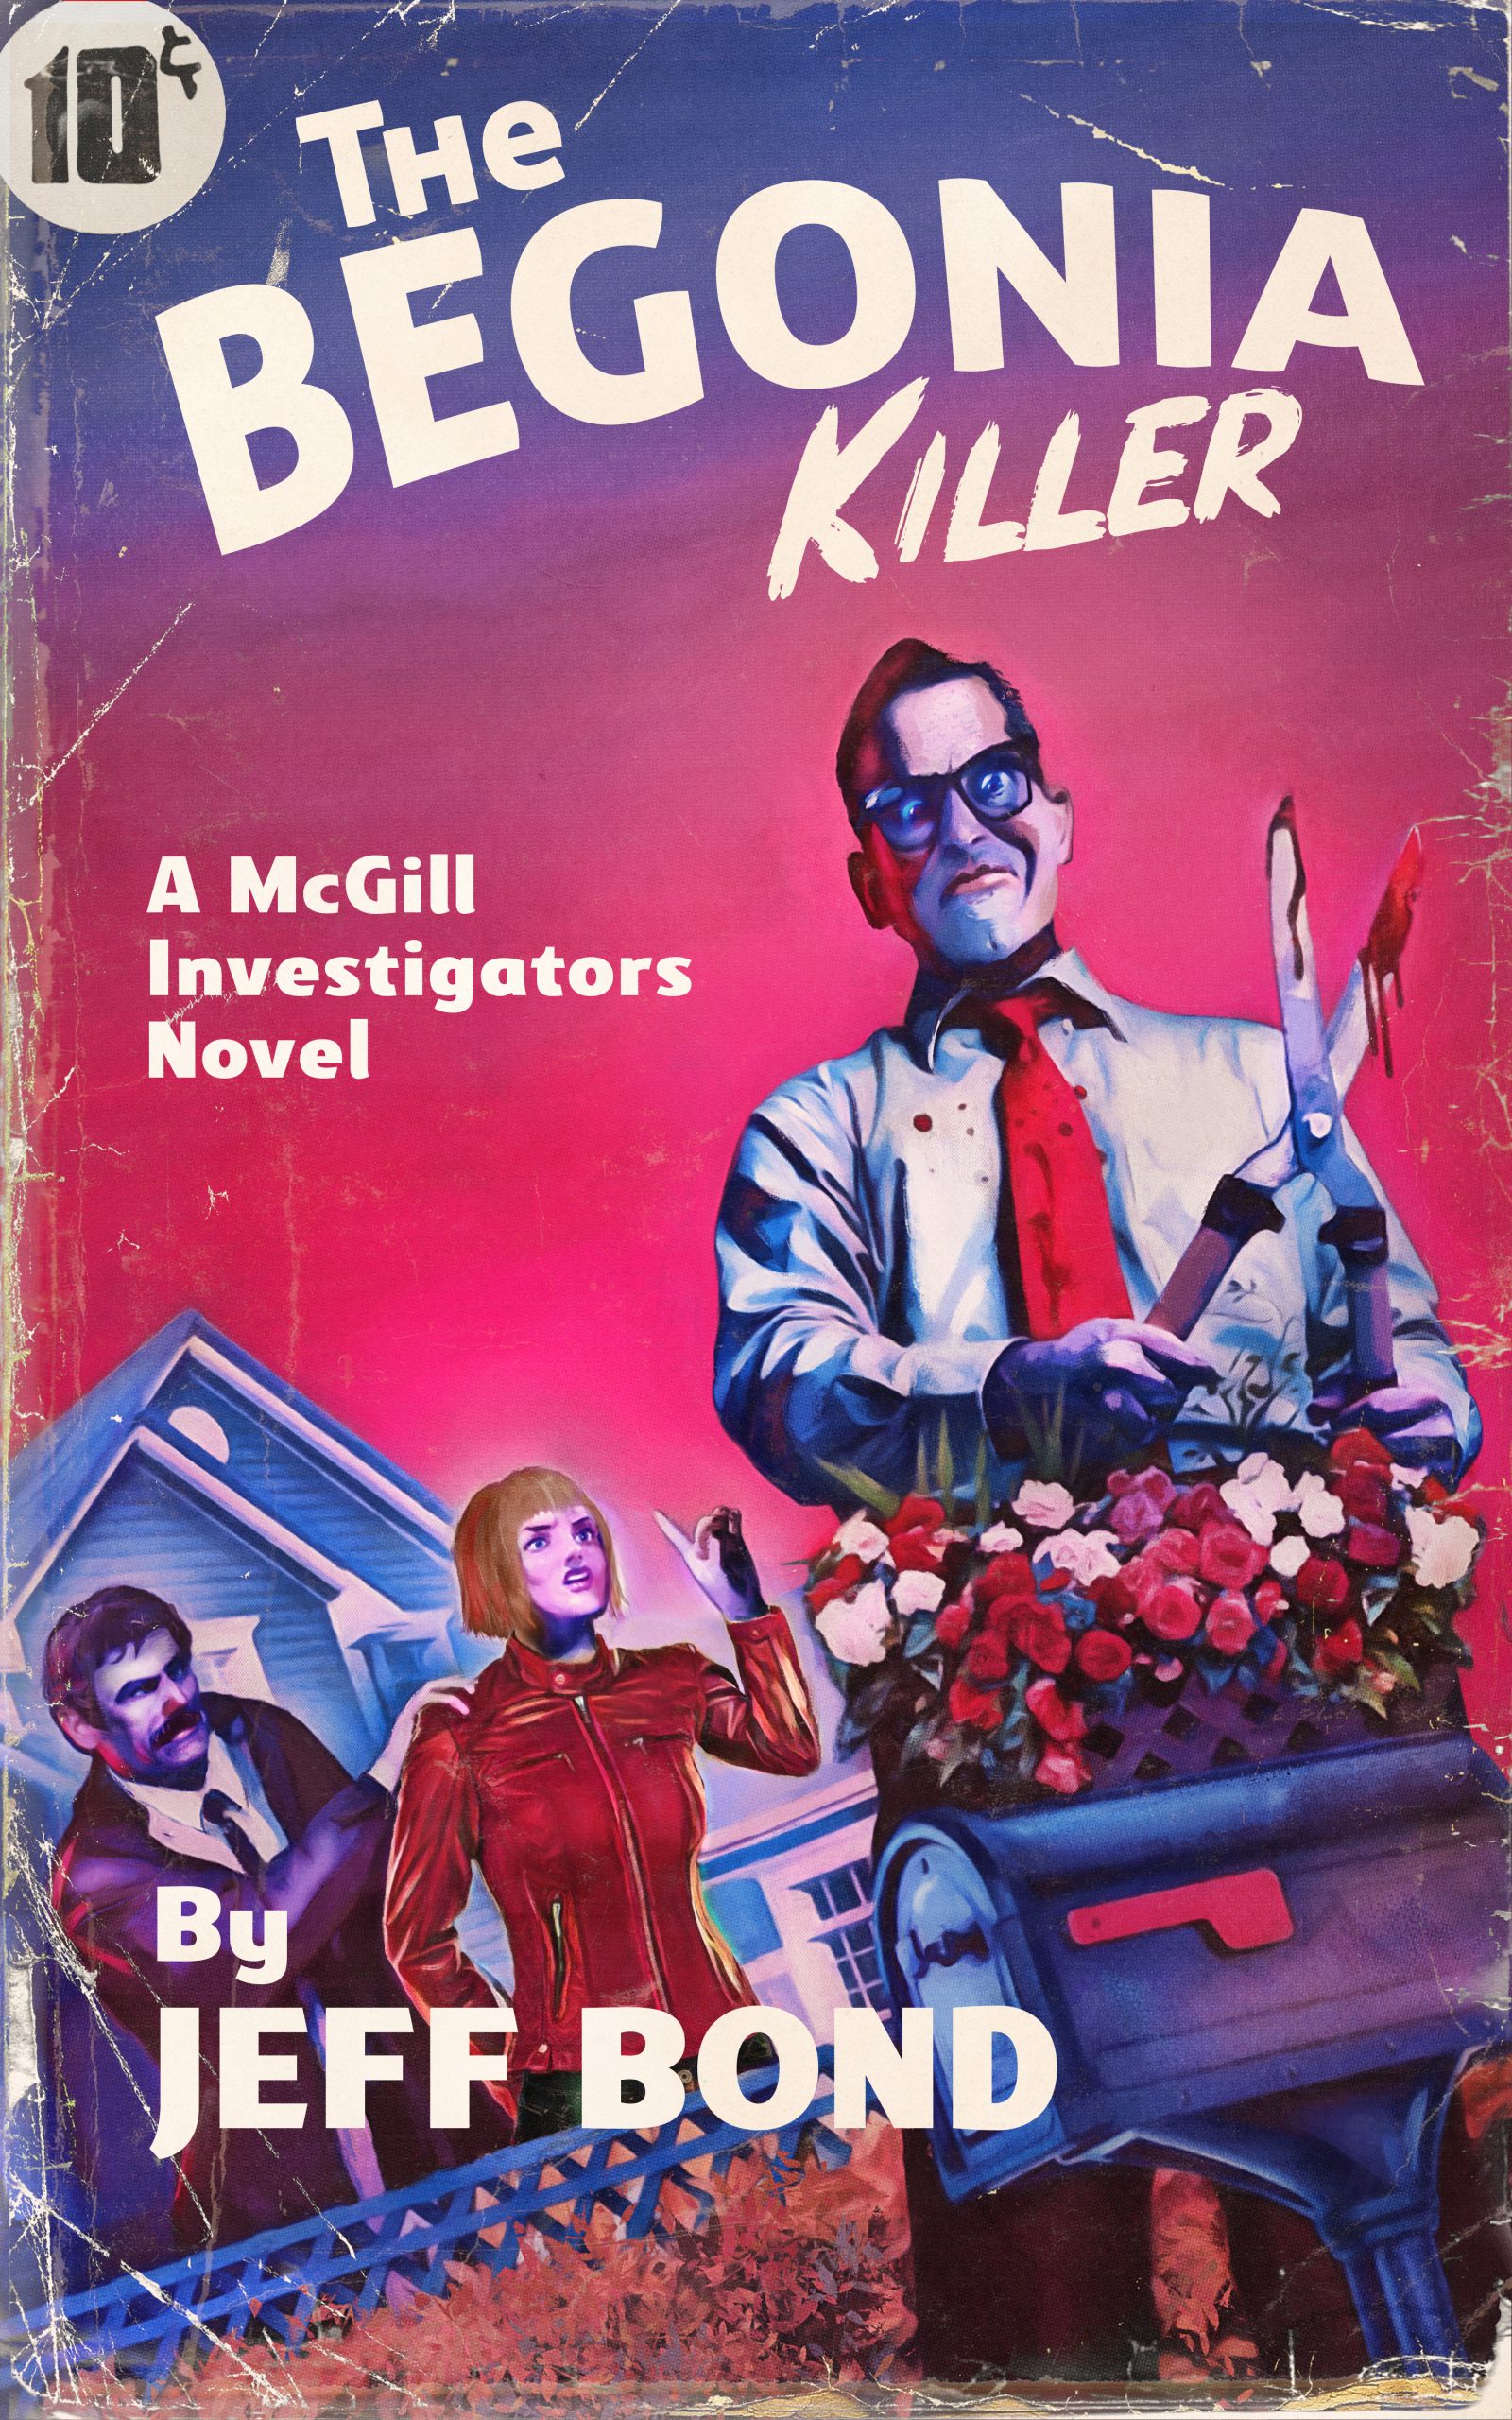 The Begonia Killer by Jeff Bond